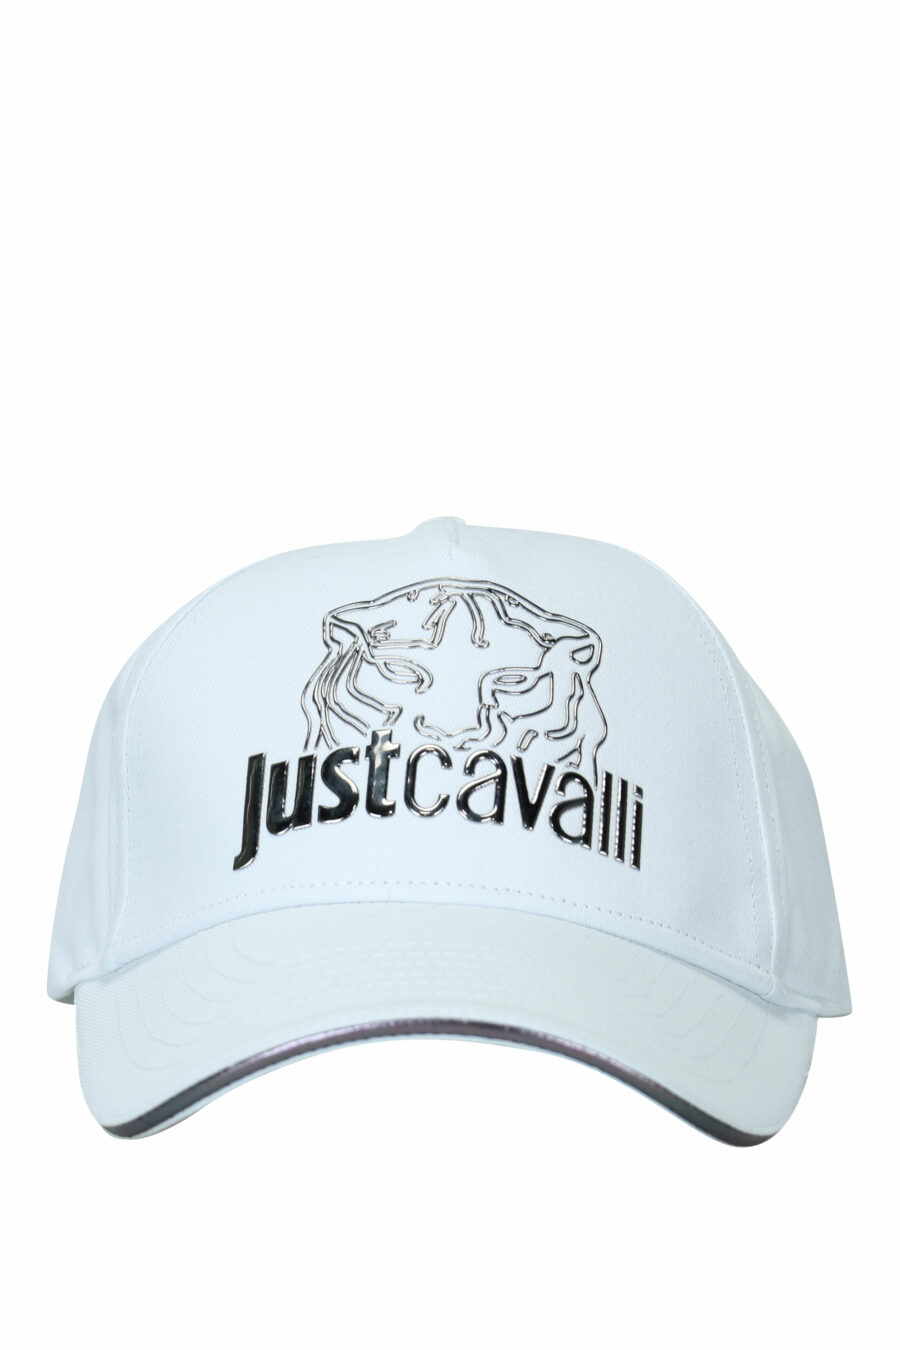 White cap with silver tiger logo - 8052672742308